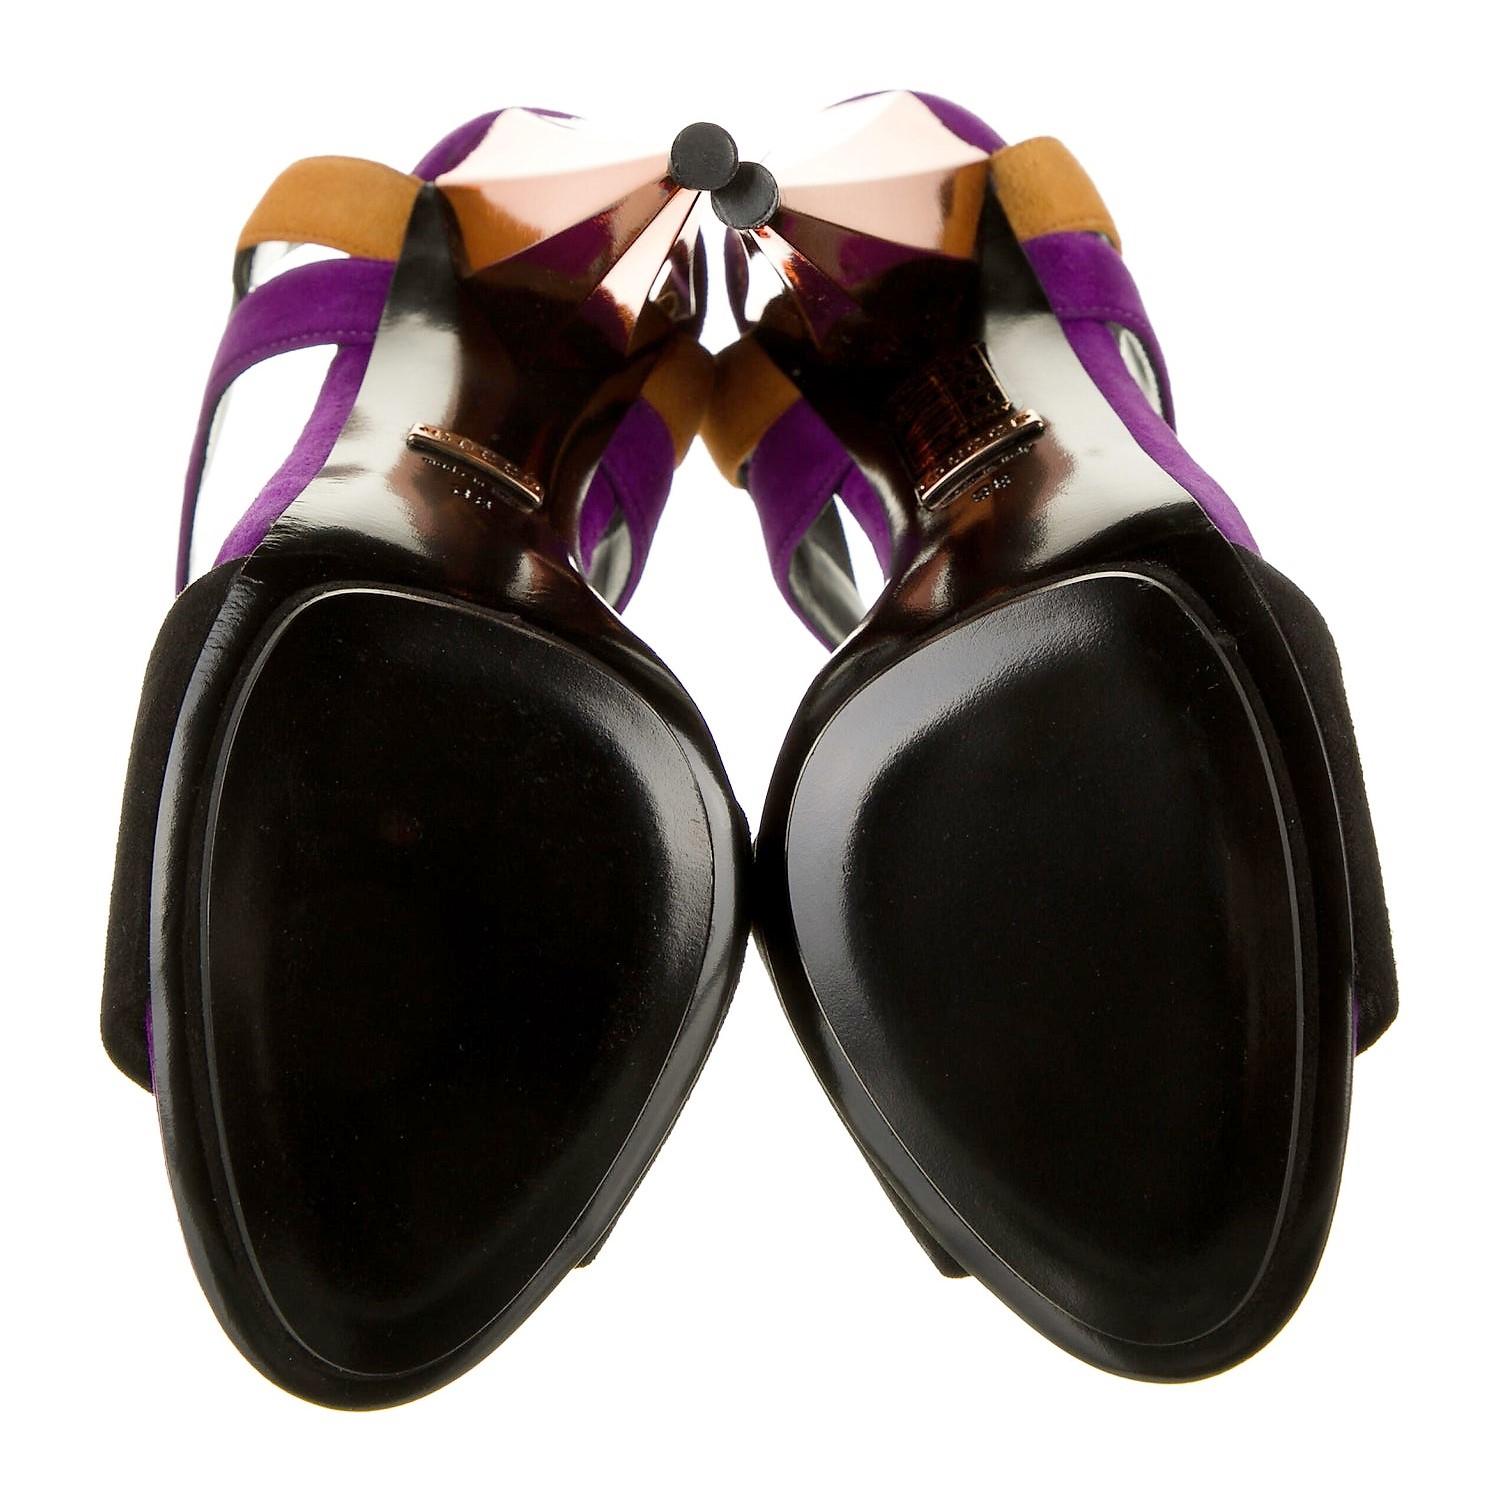 New Gucci Ad Runway 2014 Purple Orange Suede Mirrored Pump Heels Sz 38 For Sale 5